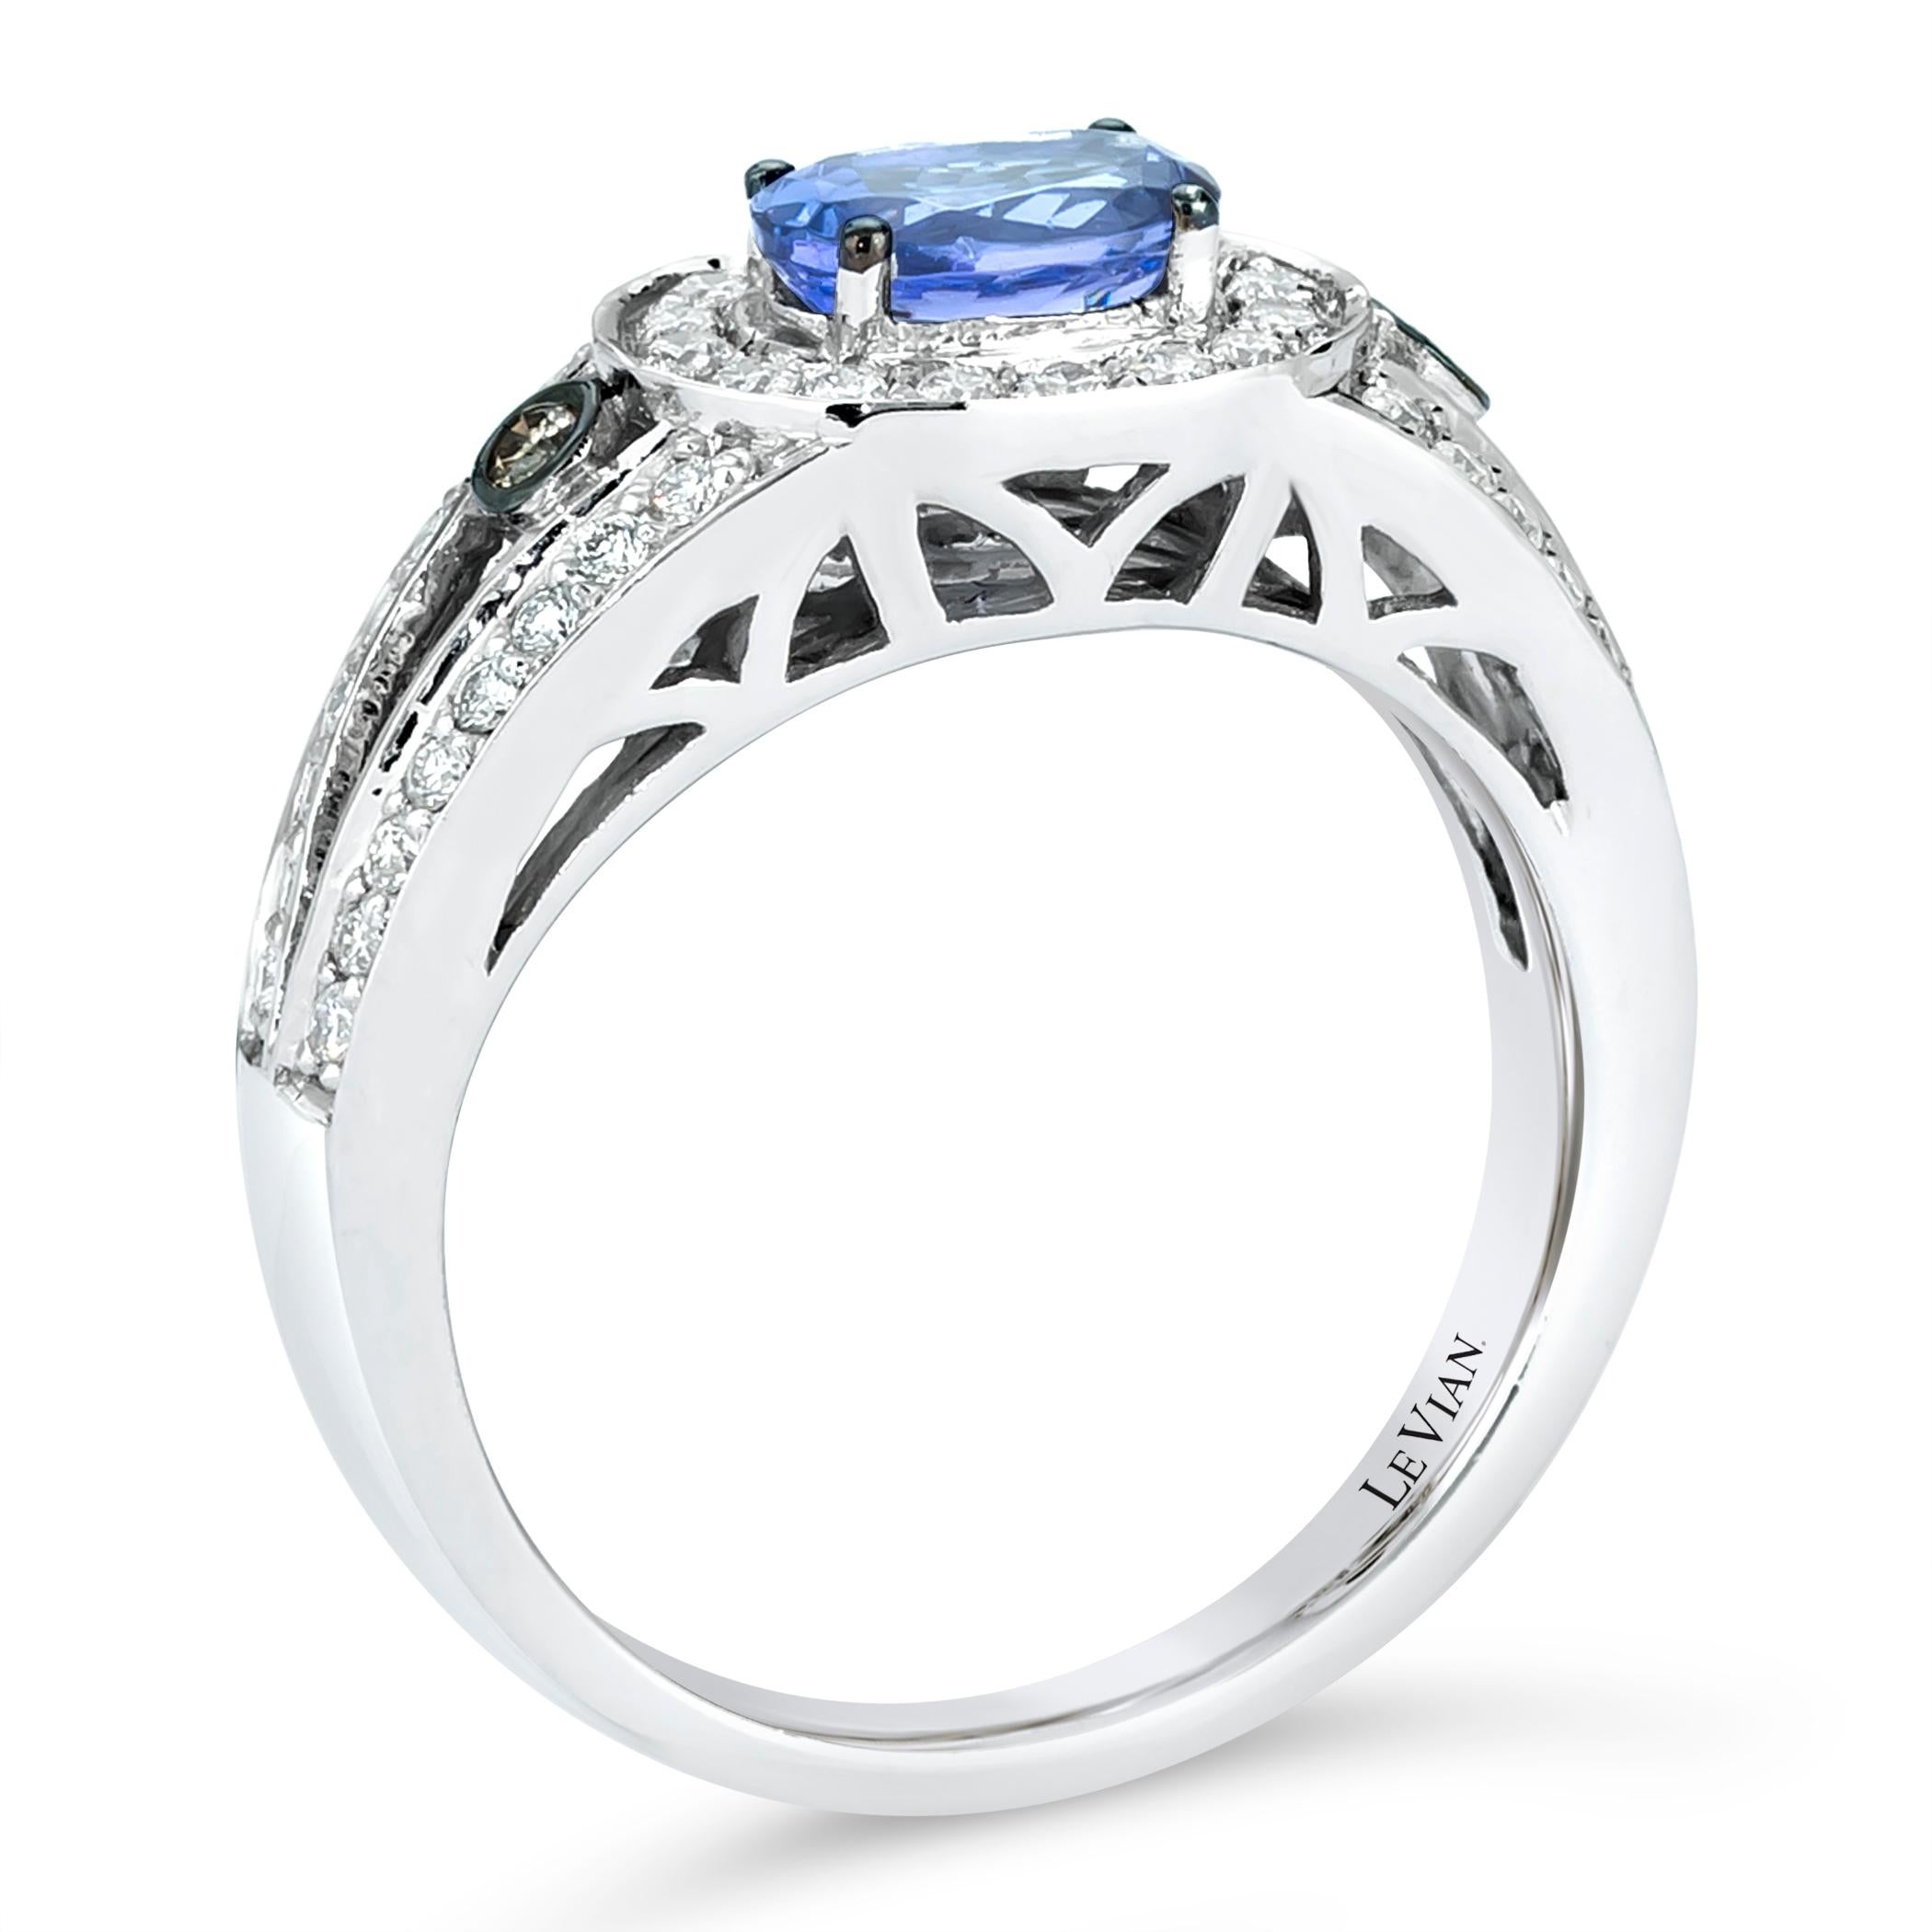 LeVian 14K Gold, Oval Gem White/Chocolate Diamond Engagement Ring - Size 4.5